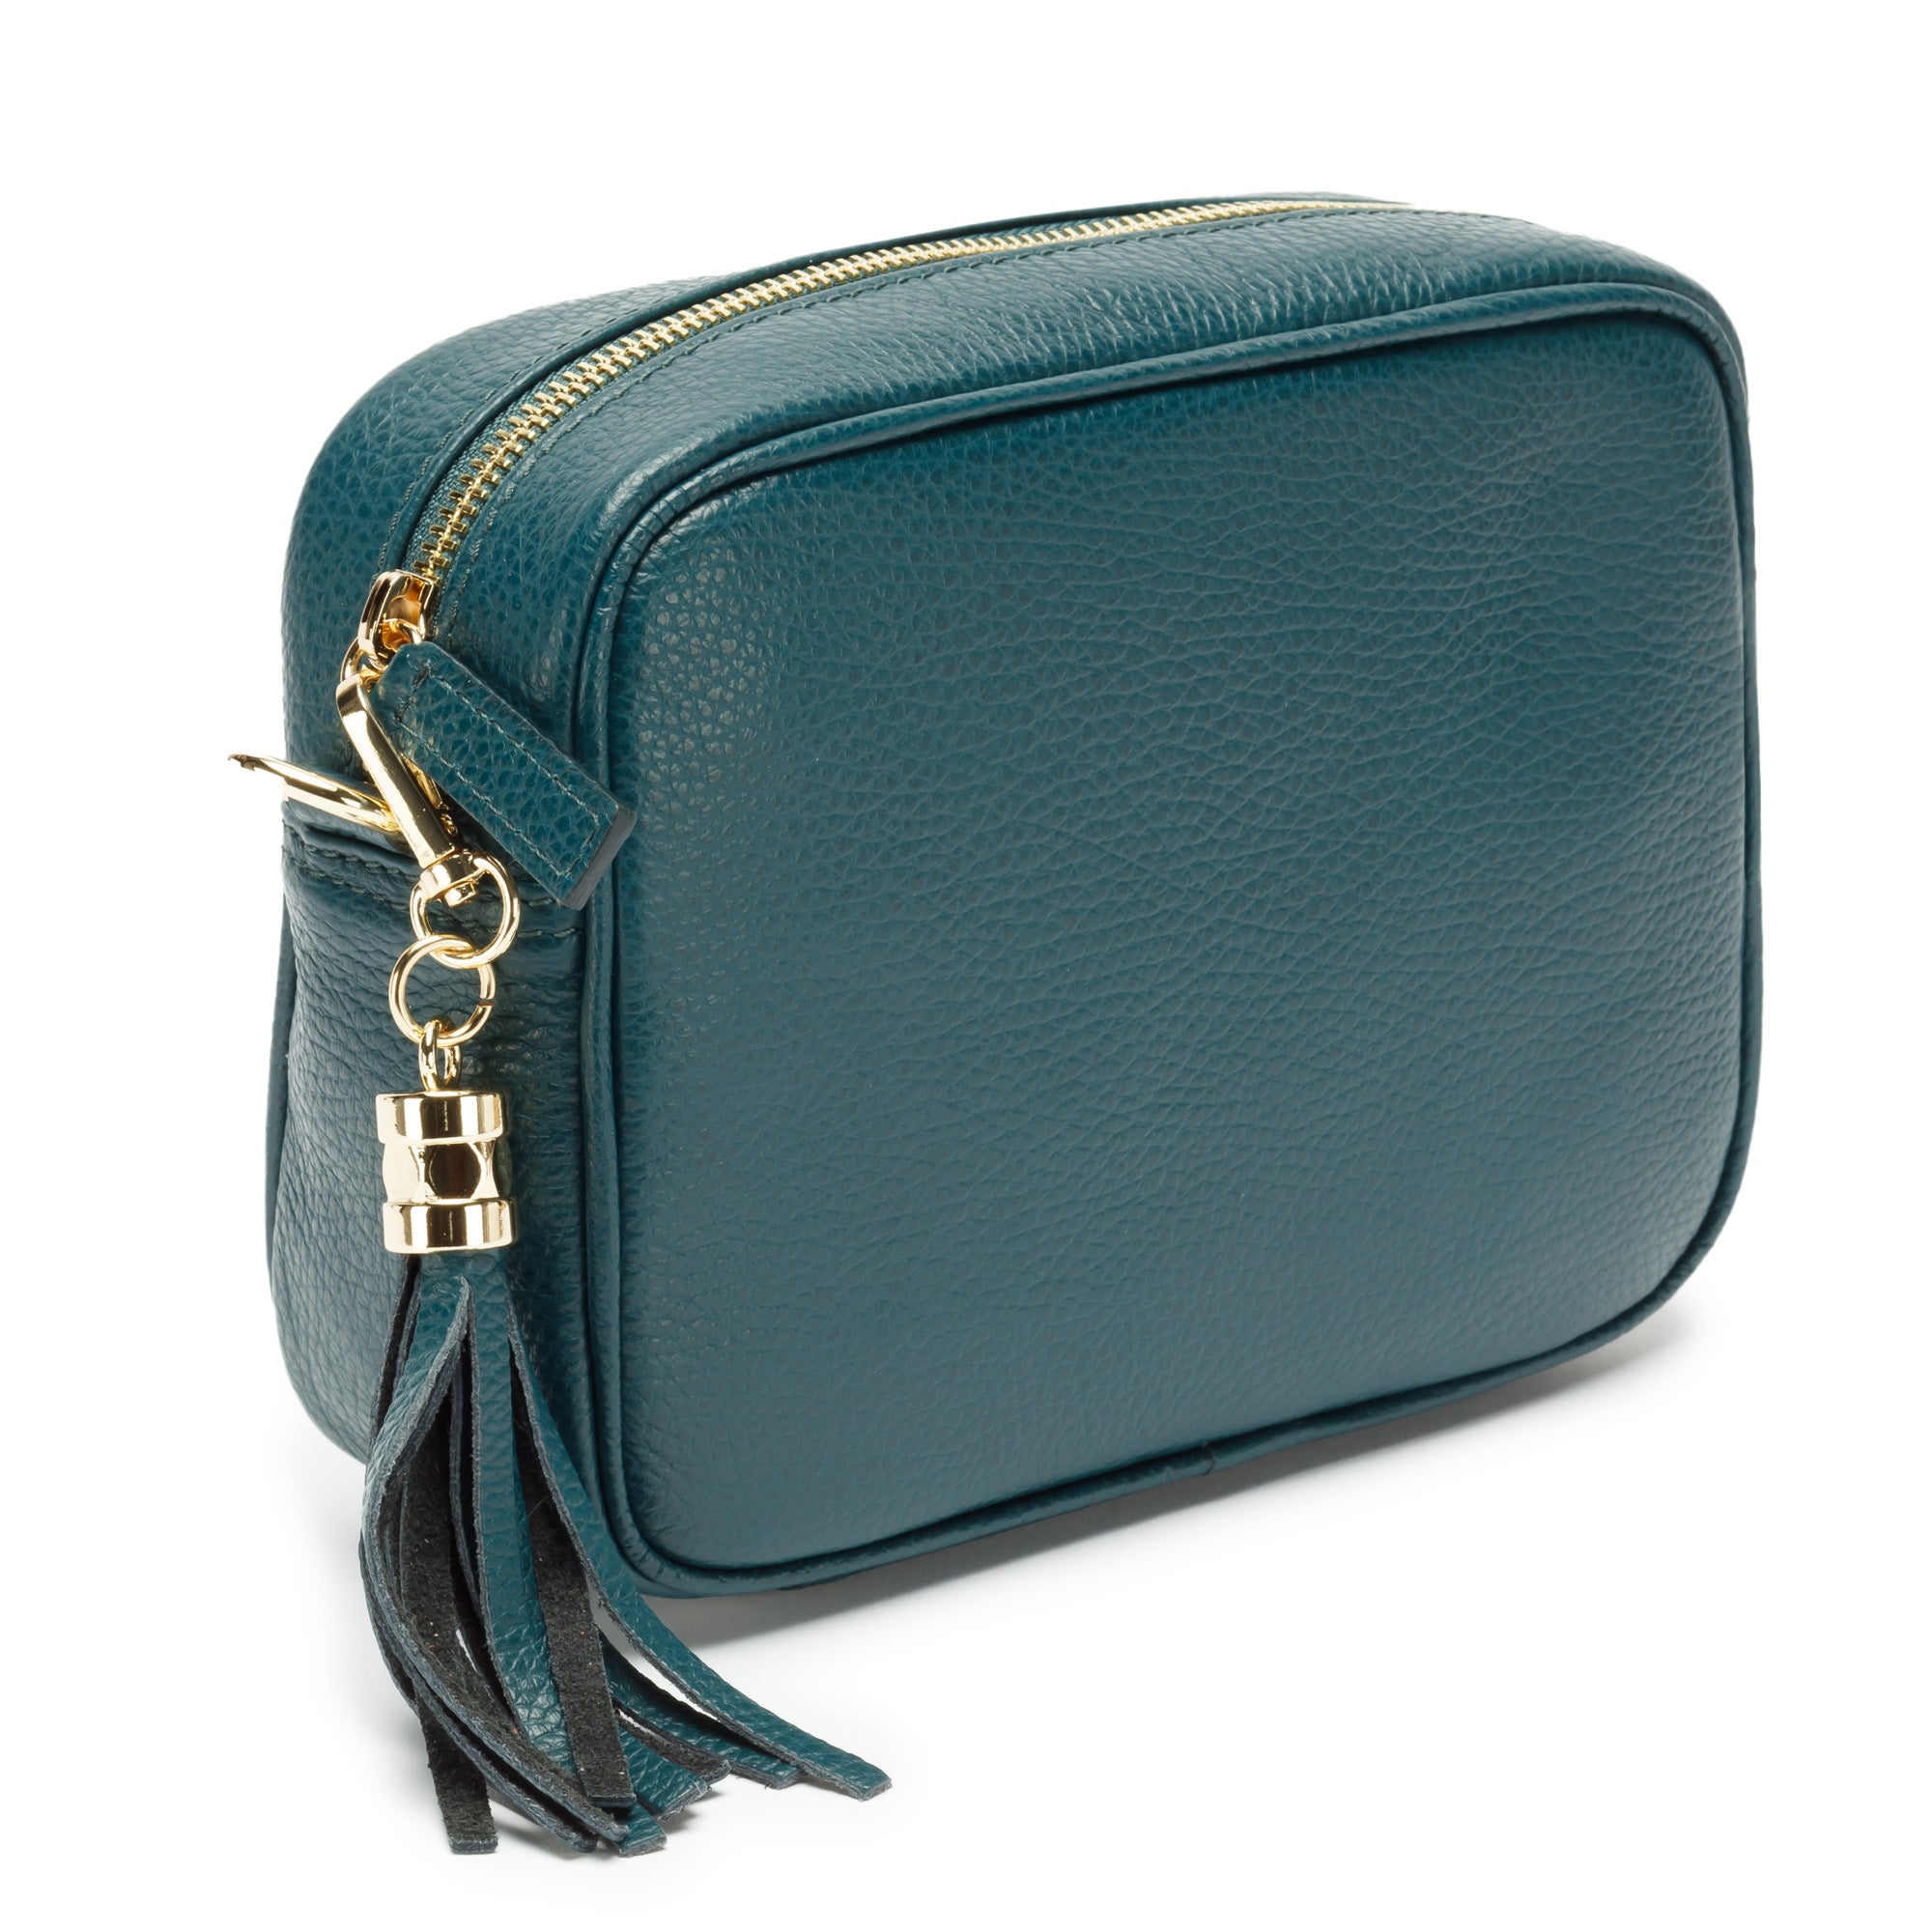 Italian Leather Aqua Turquoise Blue Green Teal Handbags & Purses